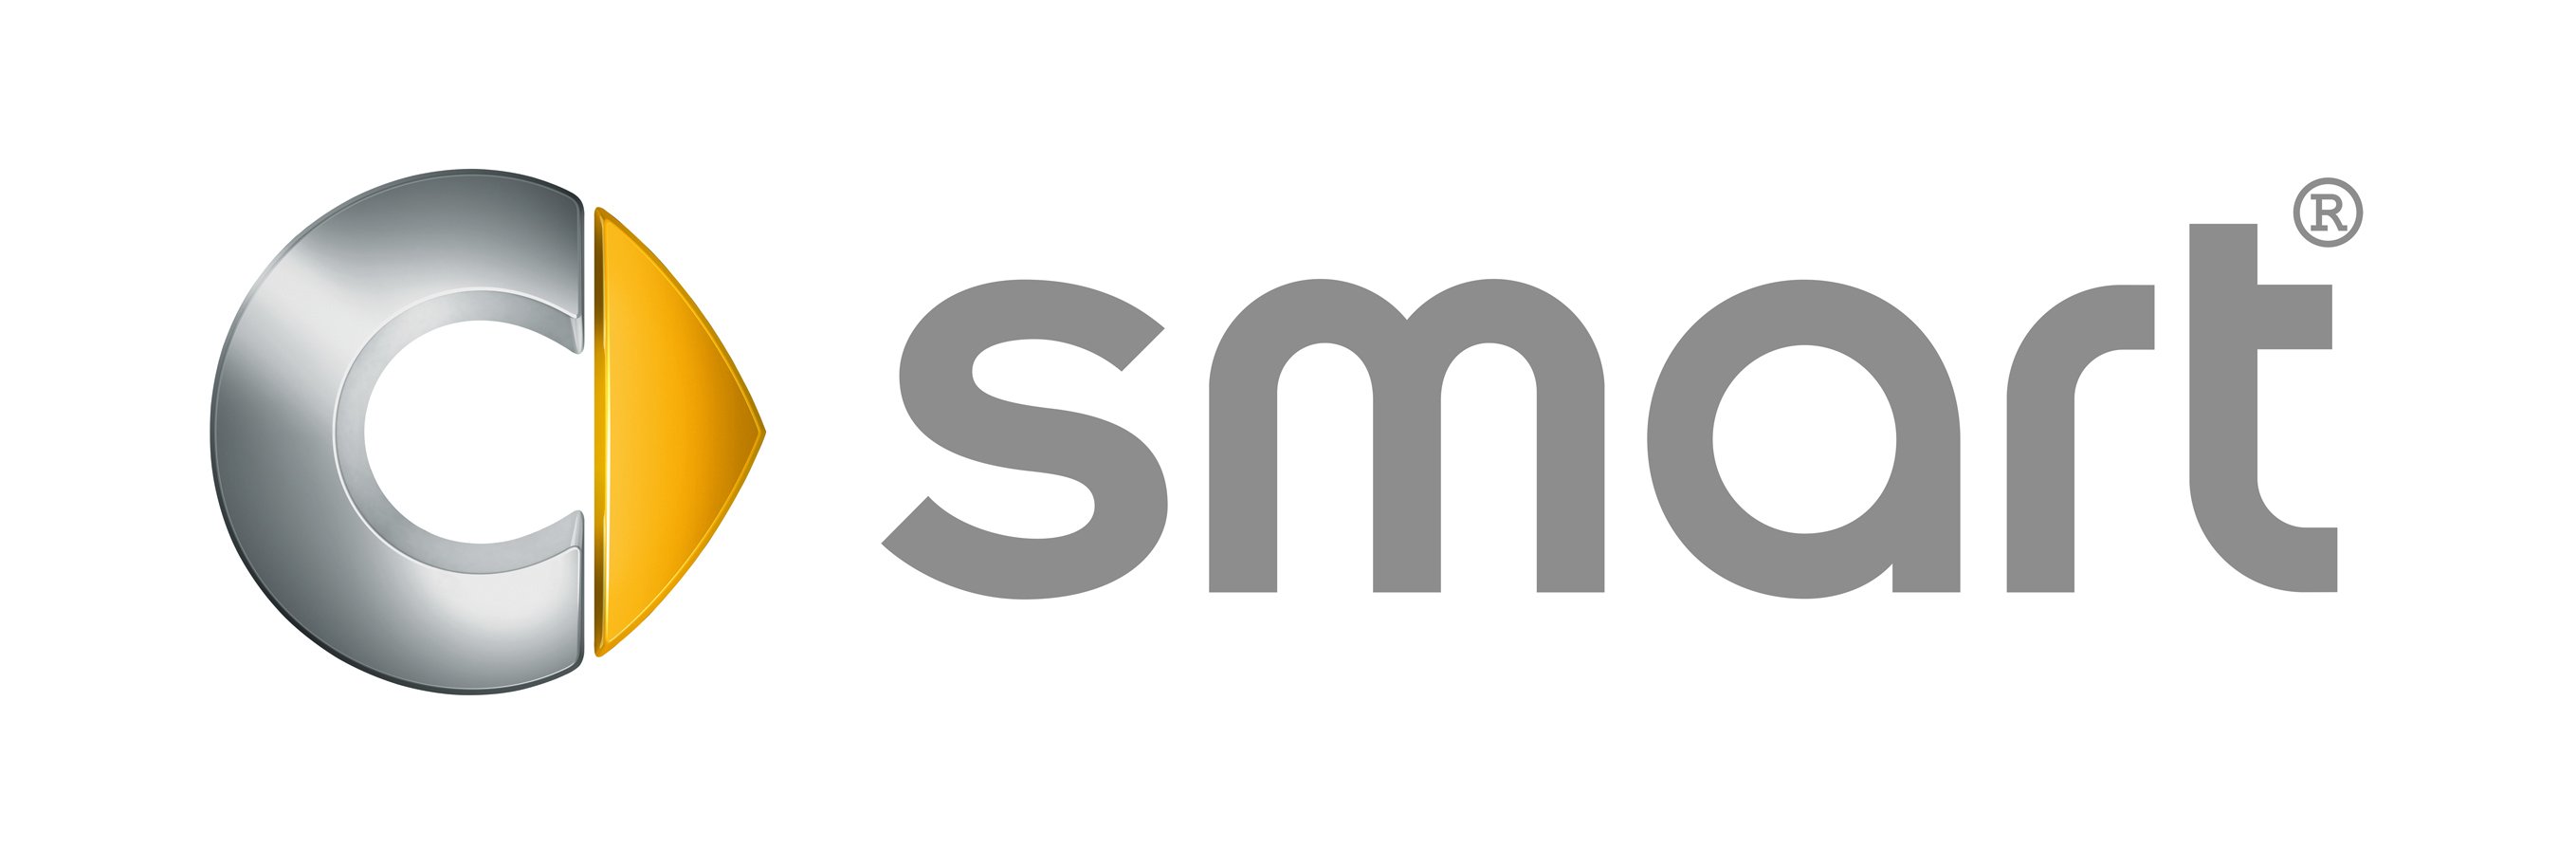 Smarter Logo photo - 1